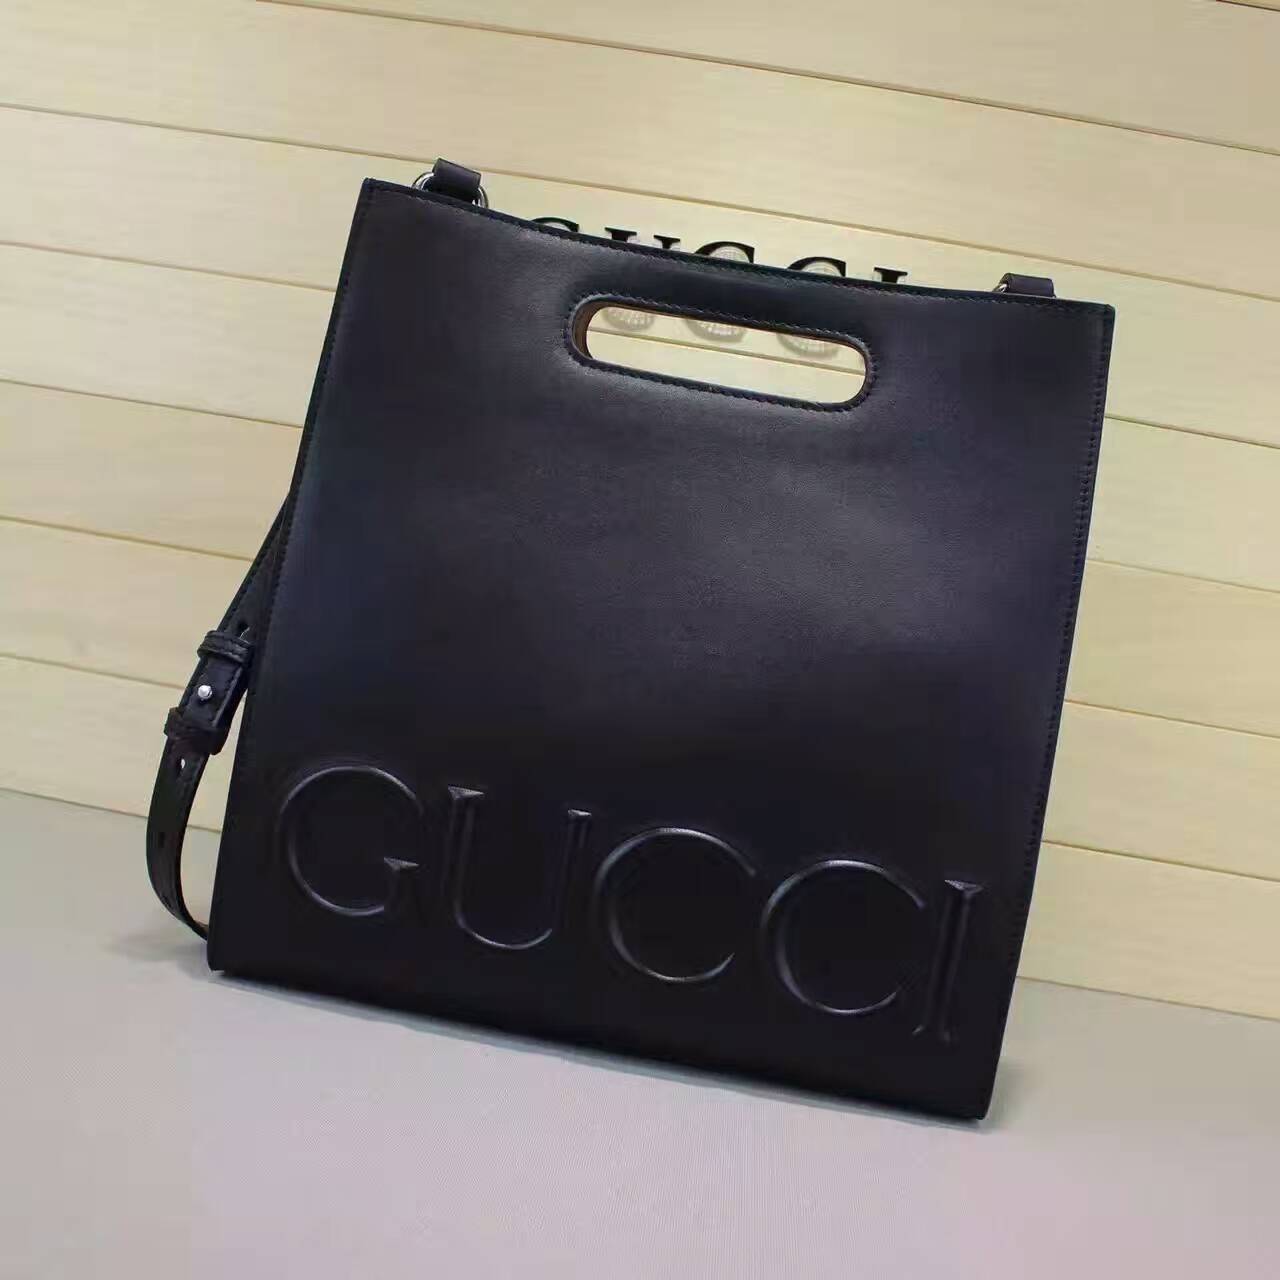 Tote Gucci XL de Piel-409378